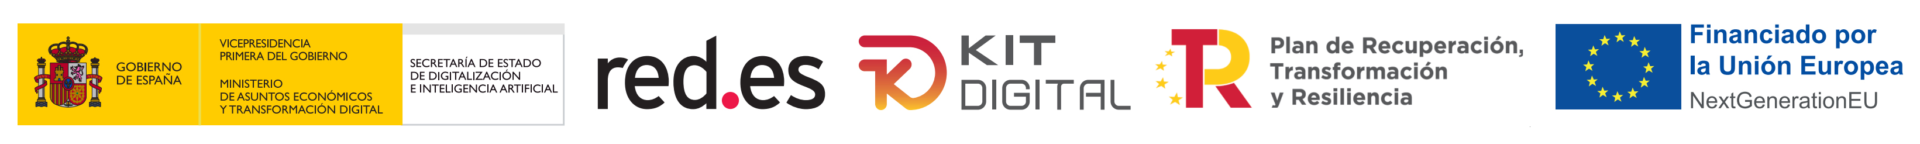 Logos_Kit_Digital